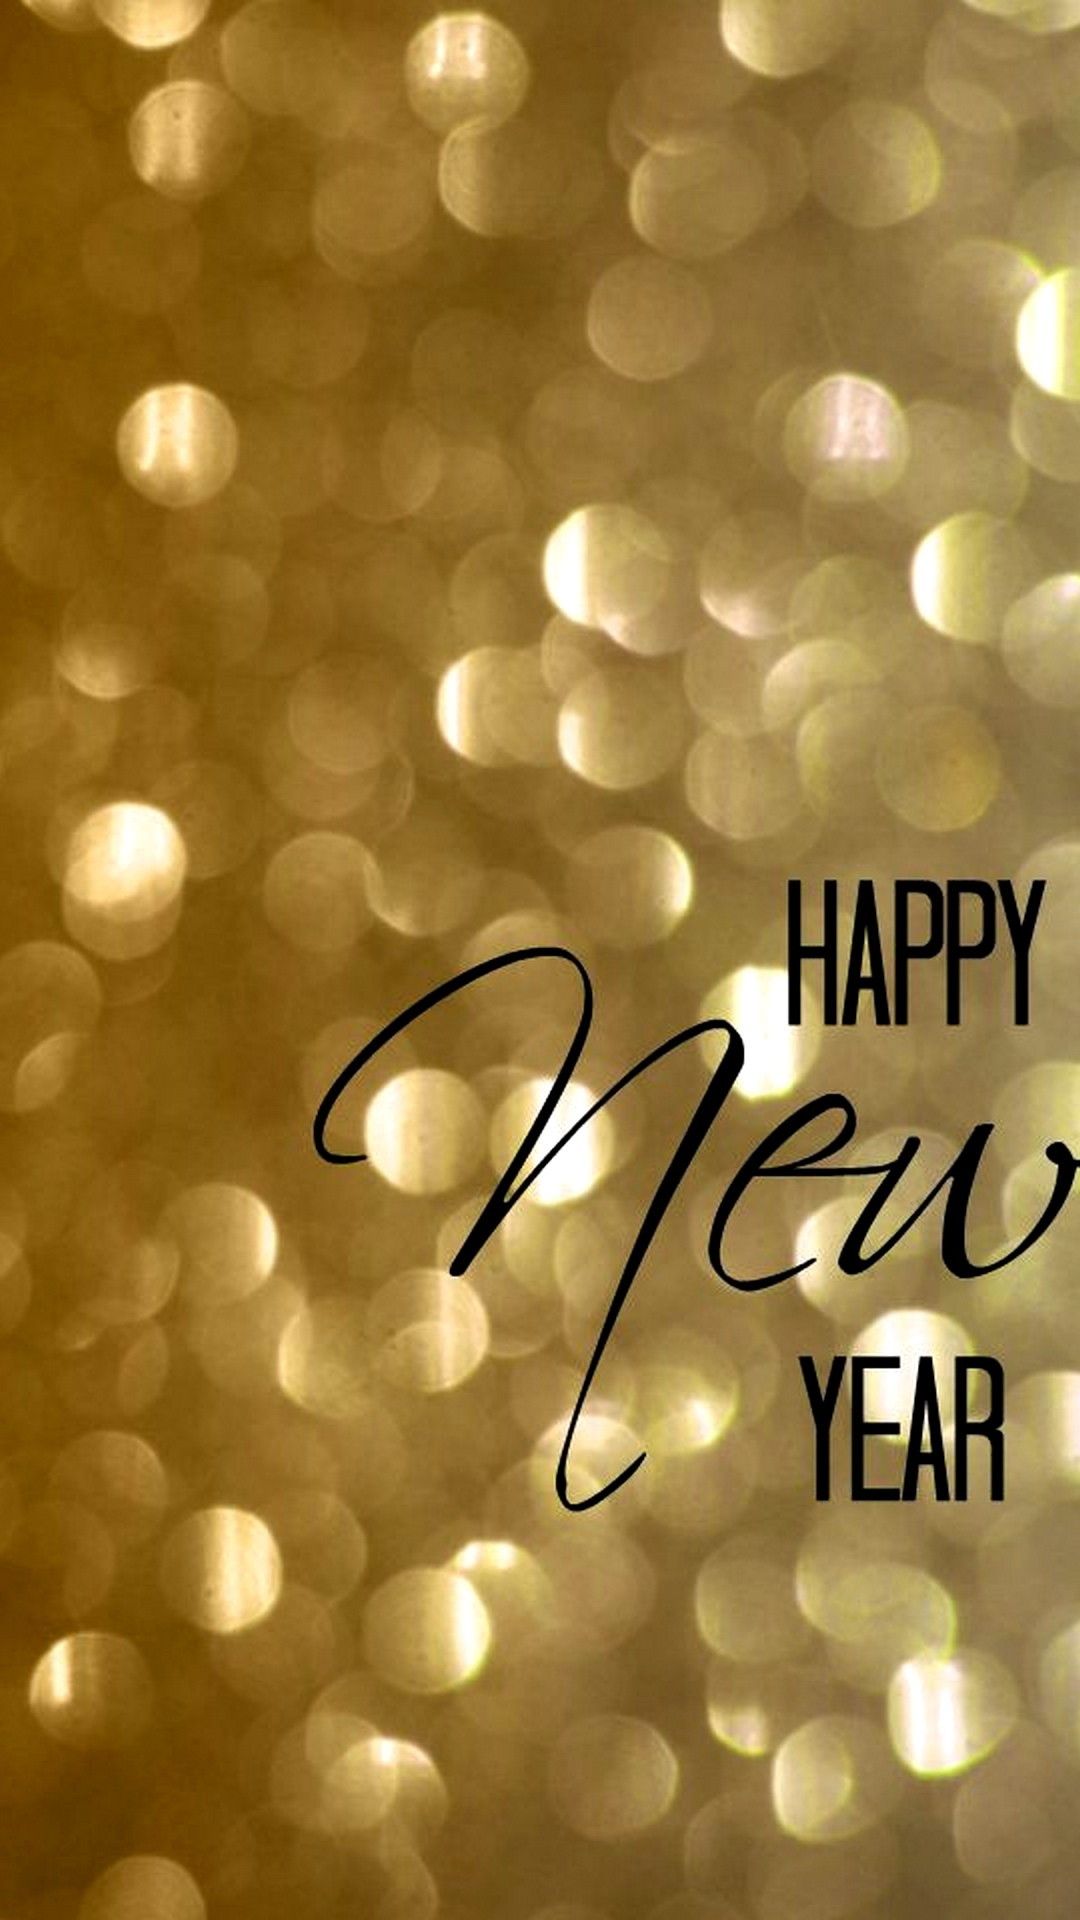 Happy new year 2019 - New Year